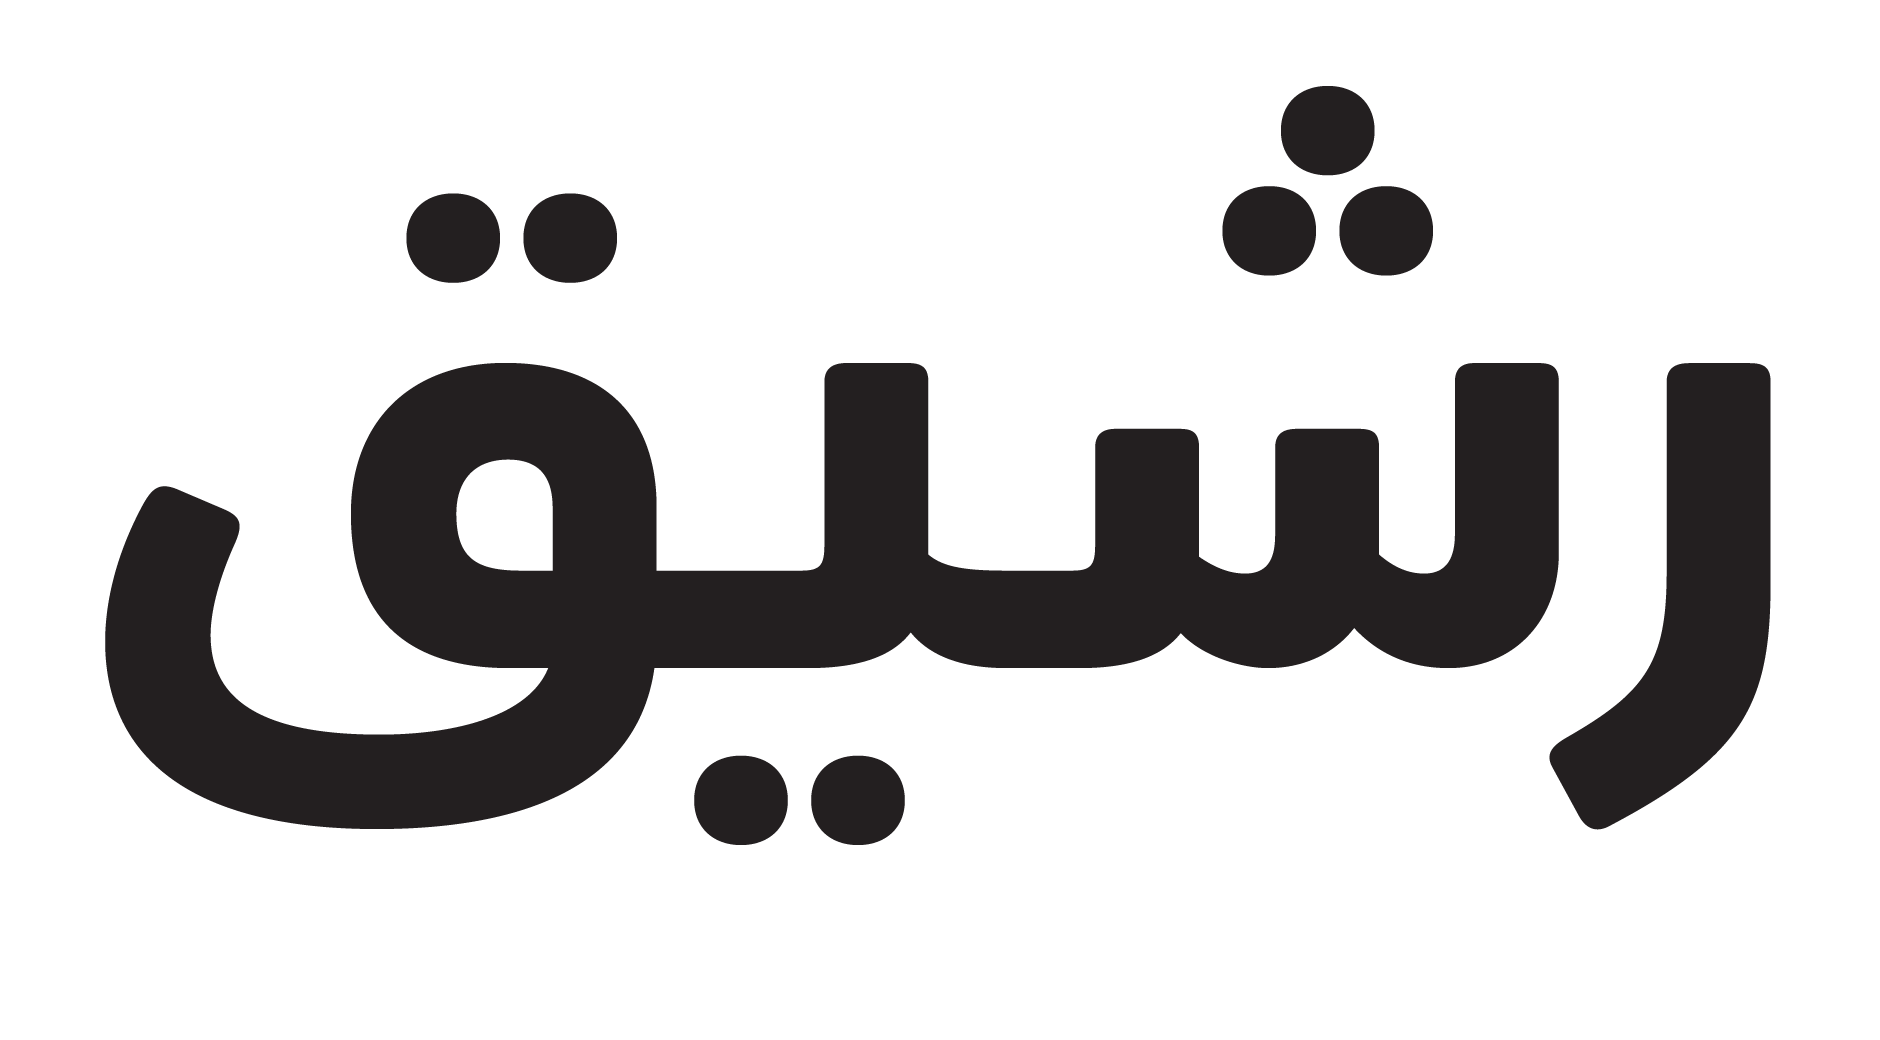 Download arabic font for mac